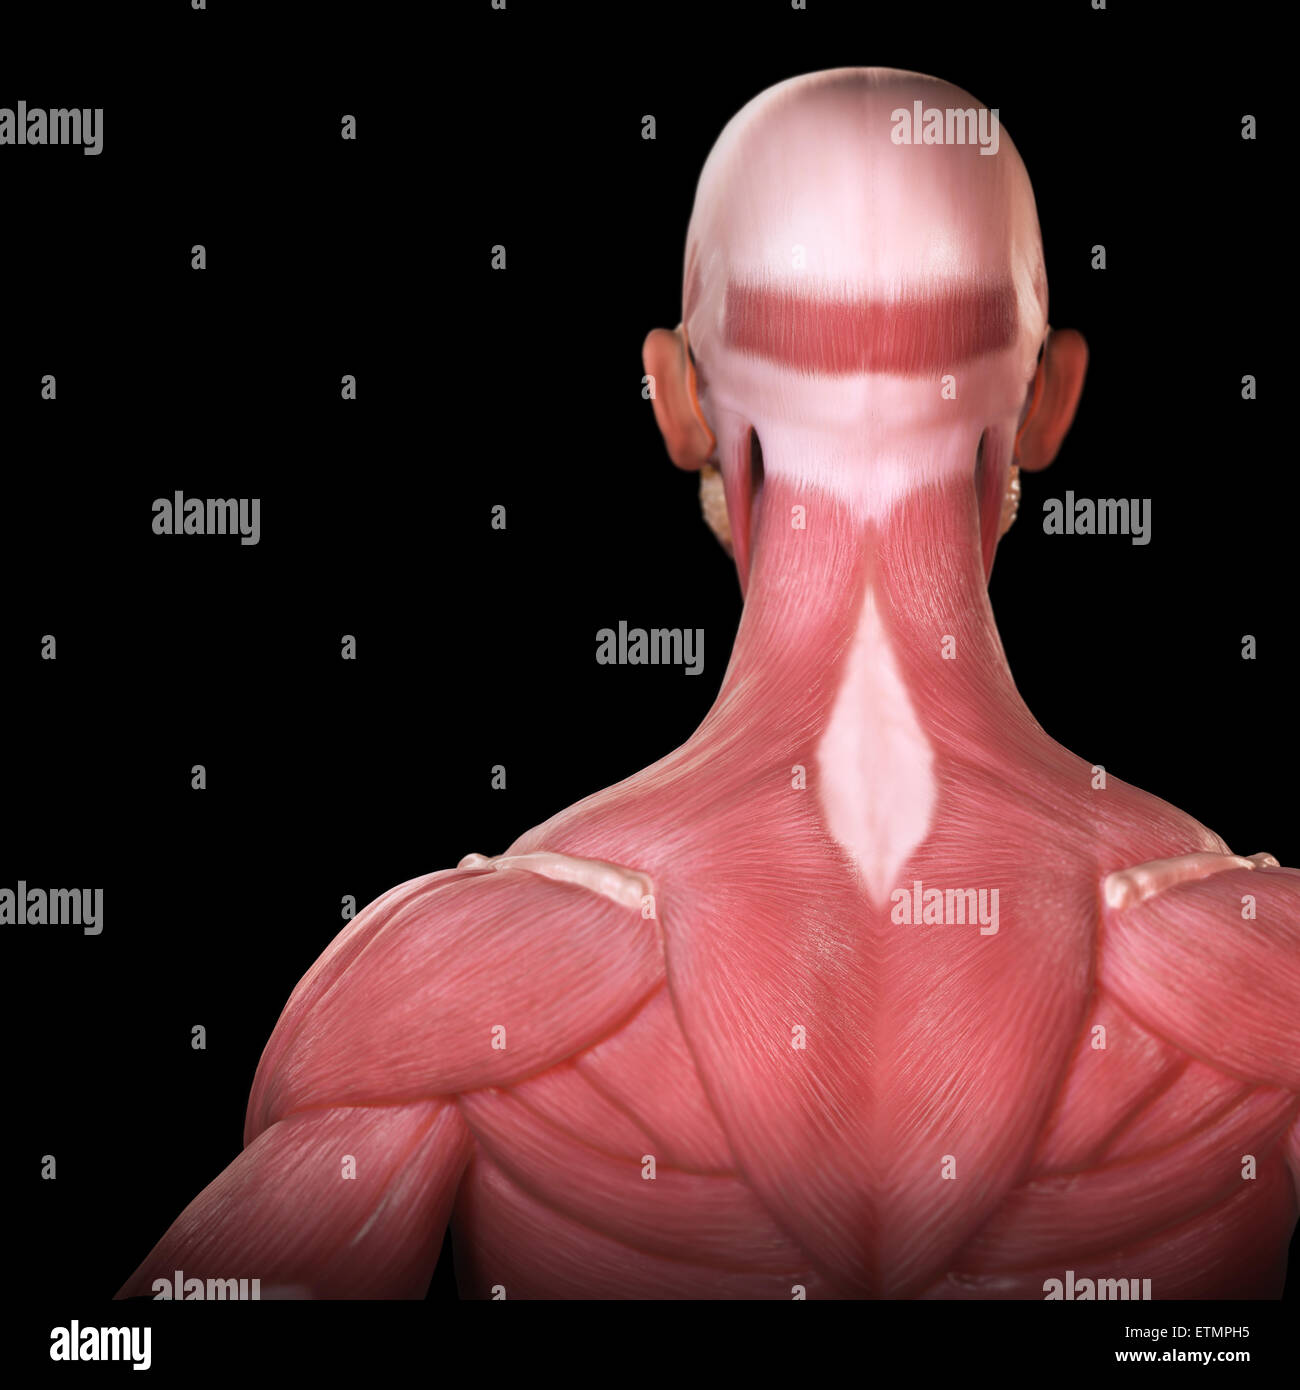 Shoulder Muscles Anatomy Stock Photos & Shoulder Muscles Anatomy Stock